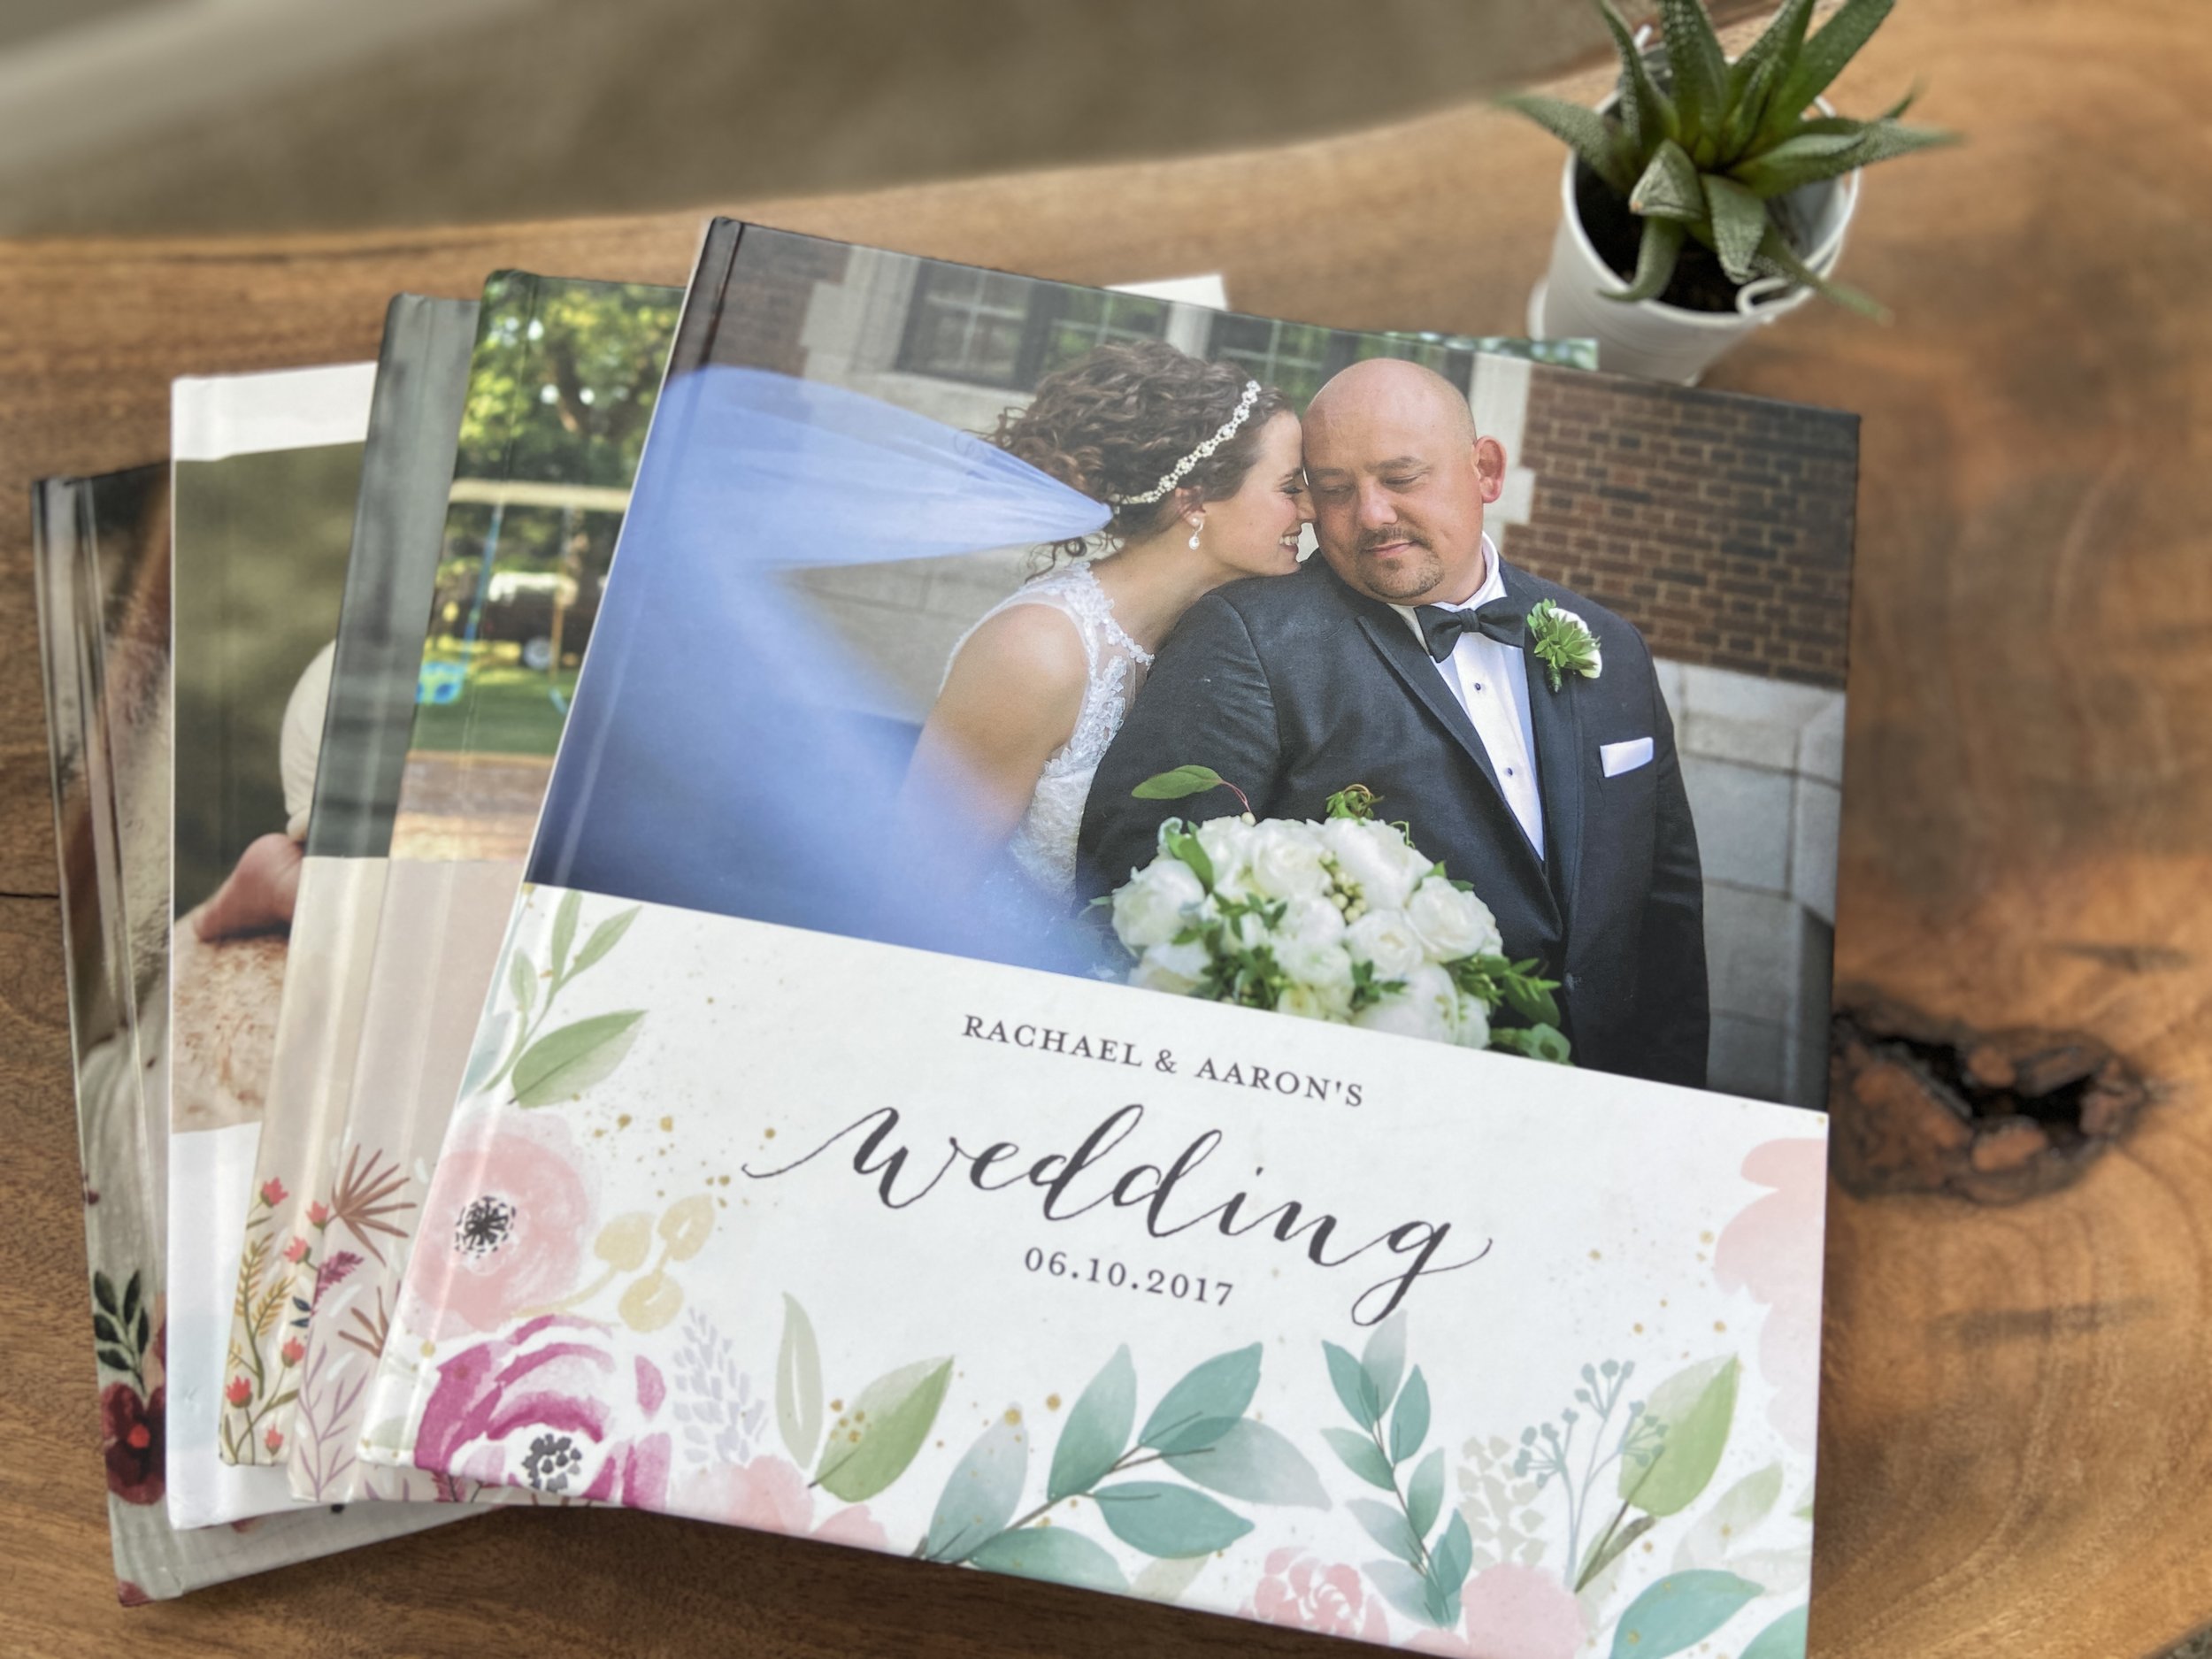 How to Organize a Wedding Album: 3 Tips to Make Your Photo